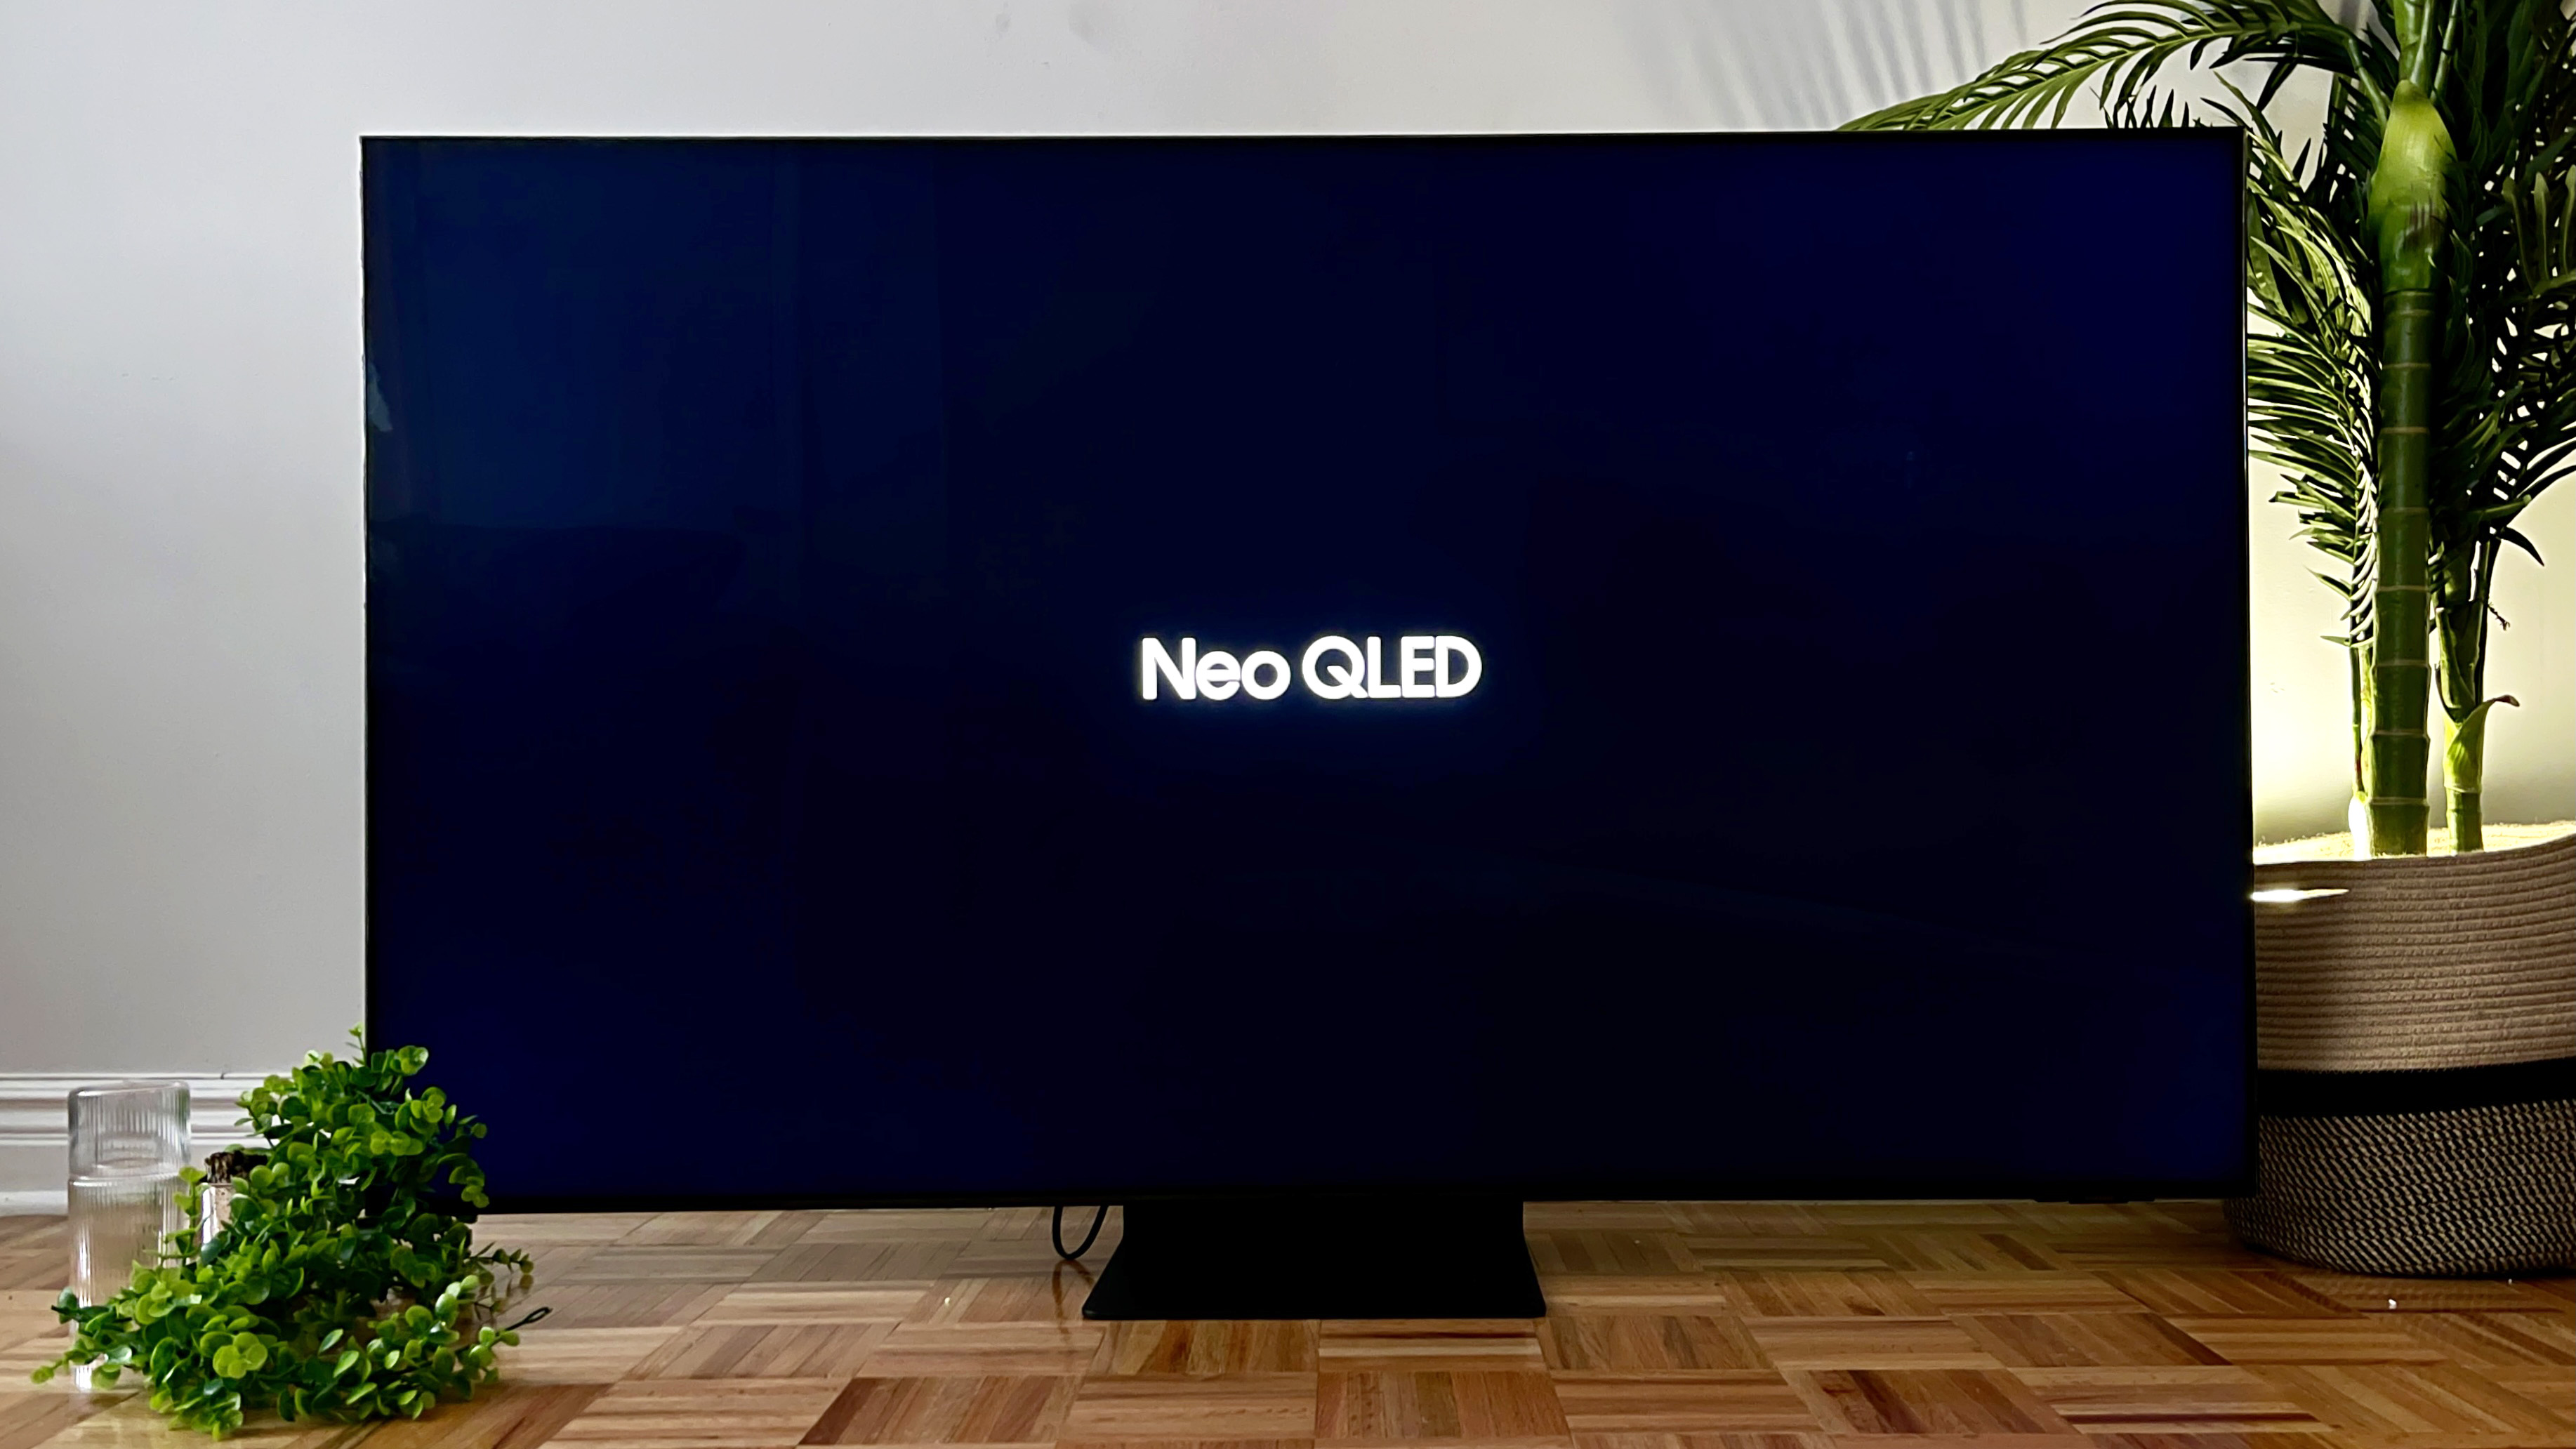 Телевизор Samsung Qn90a